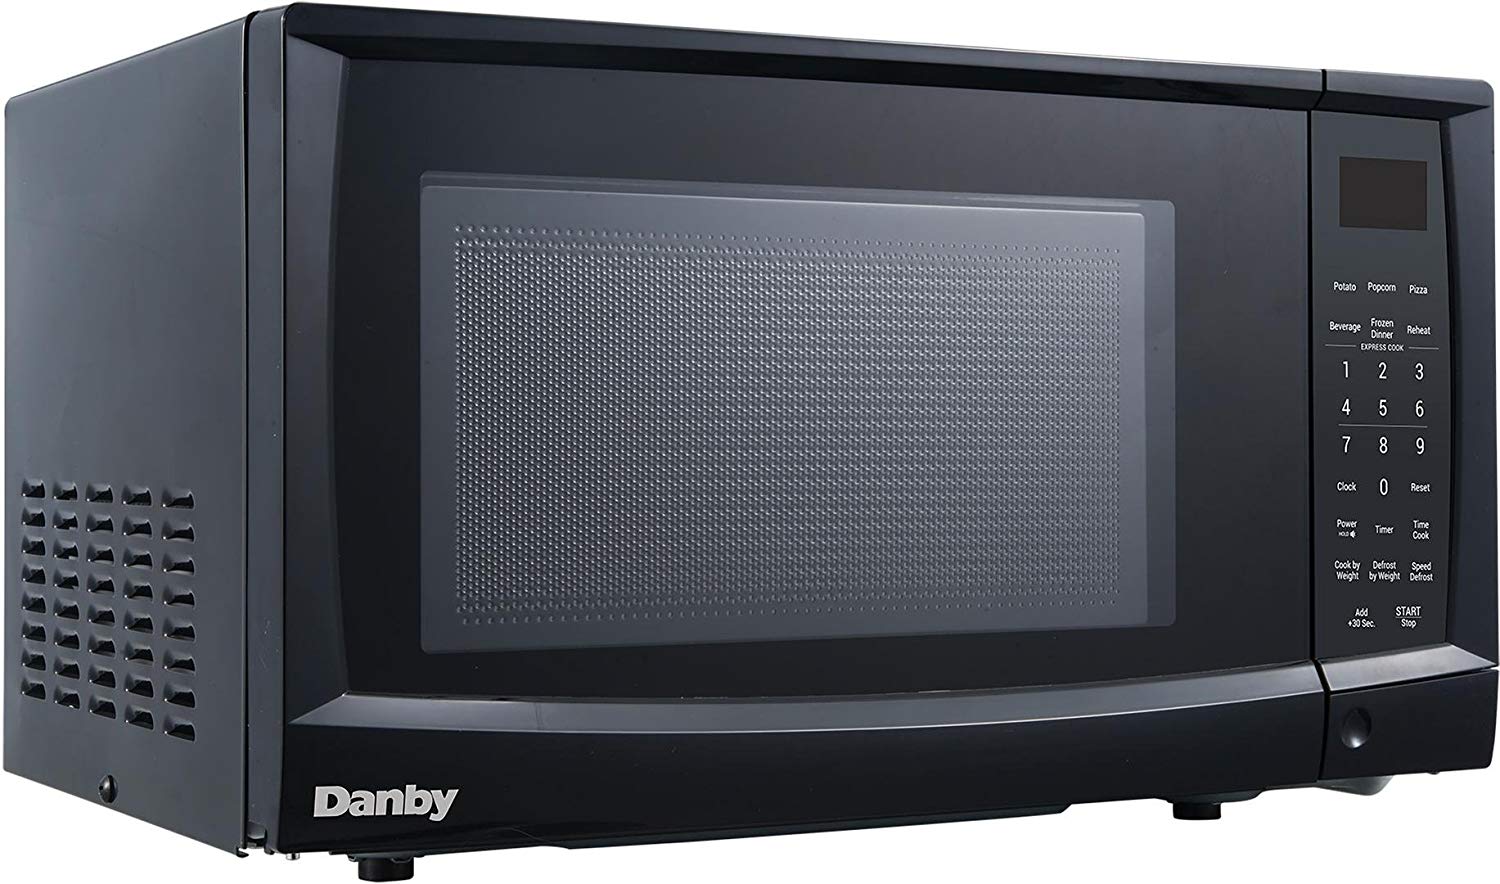 Danby DMW09A2BDB 0.9 cu. ft. Microwave Oven, Black.9 cu.ft